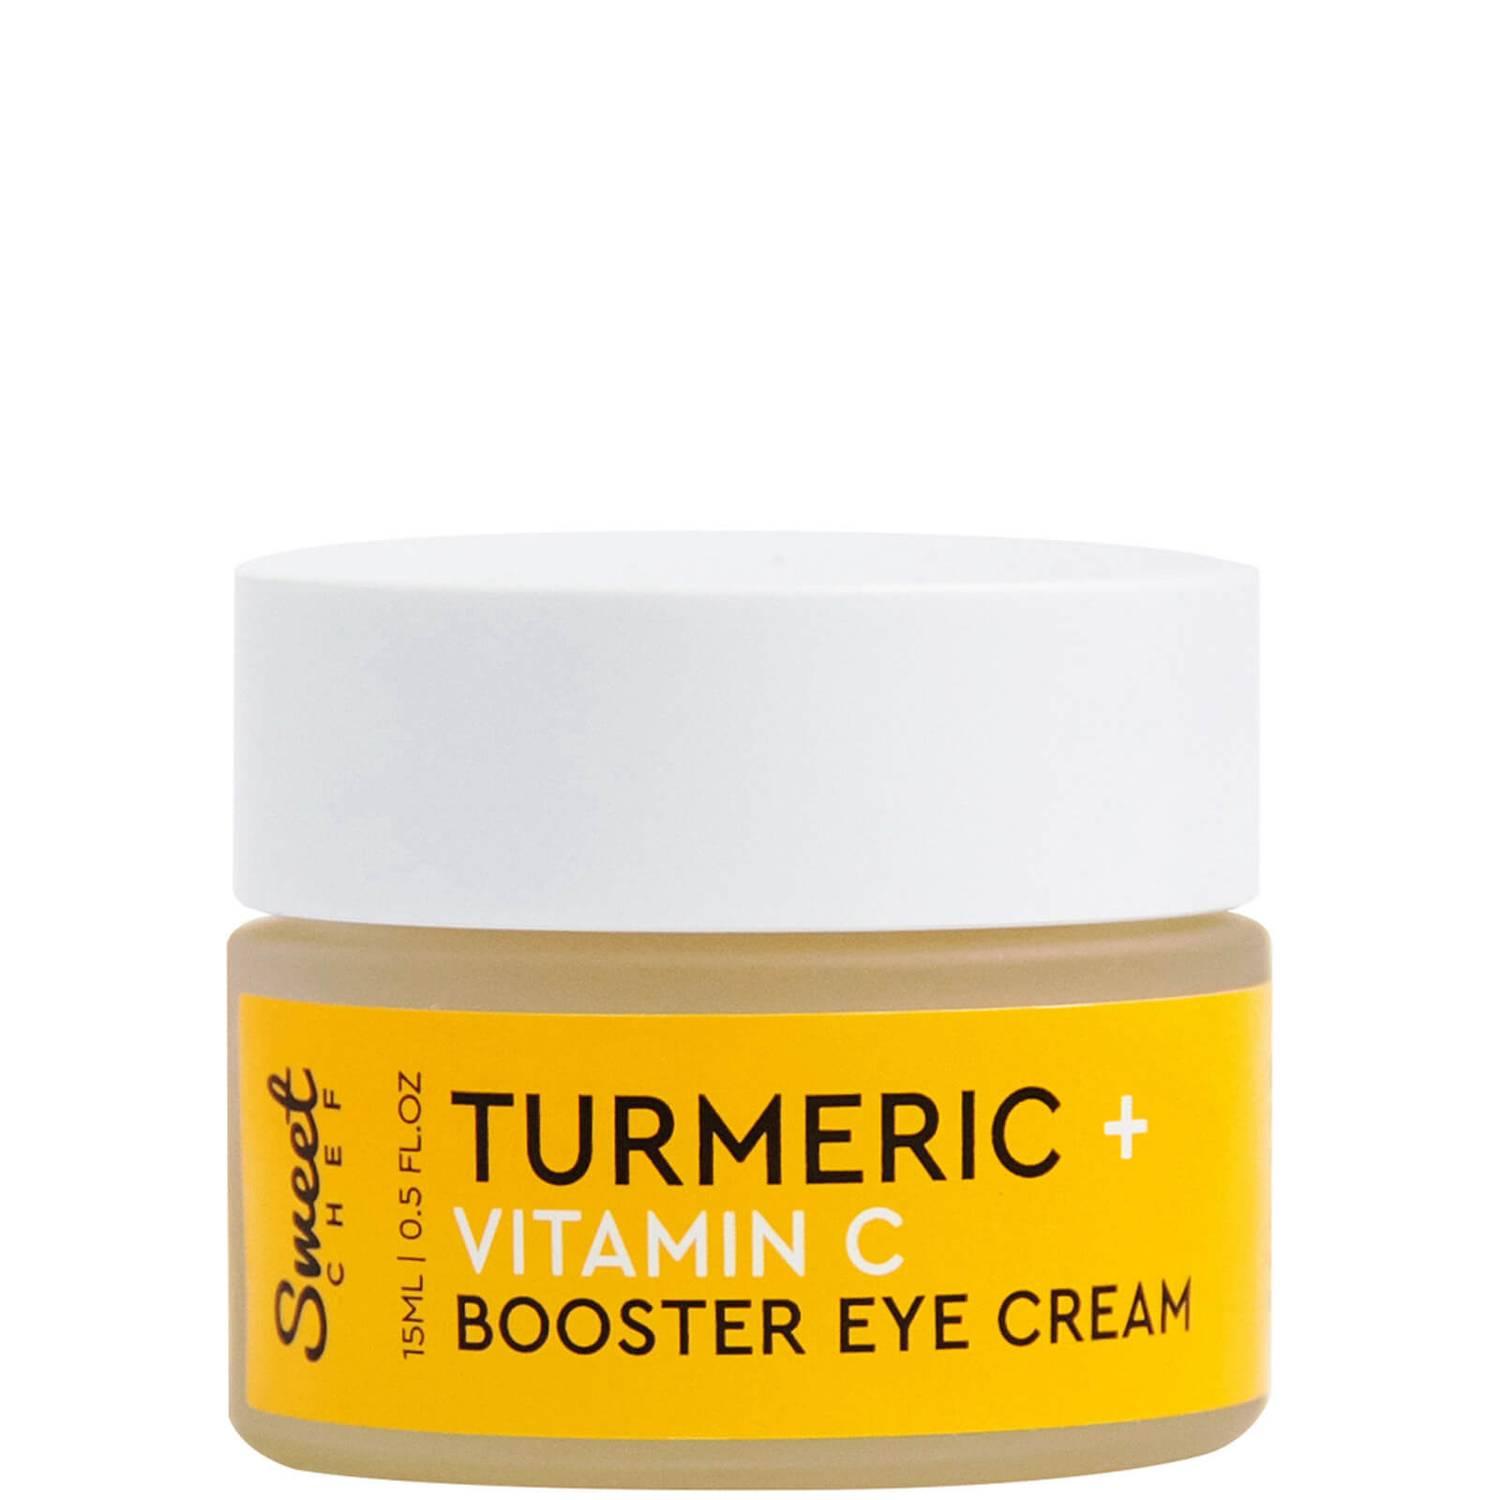 Turmeric + Vitamin C Booster Eye Cream